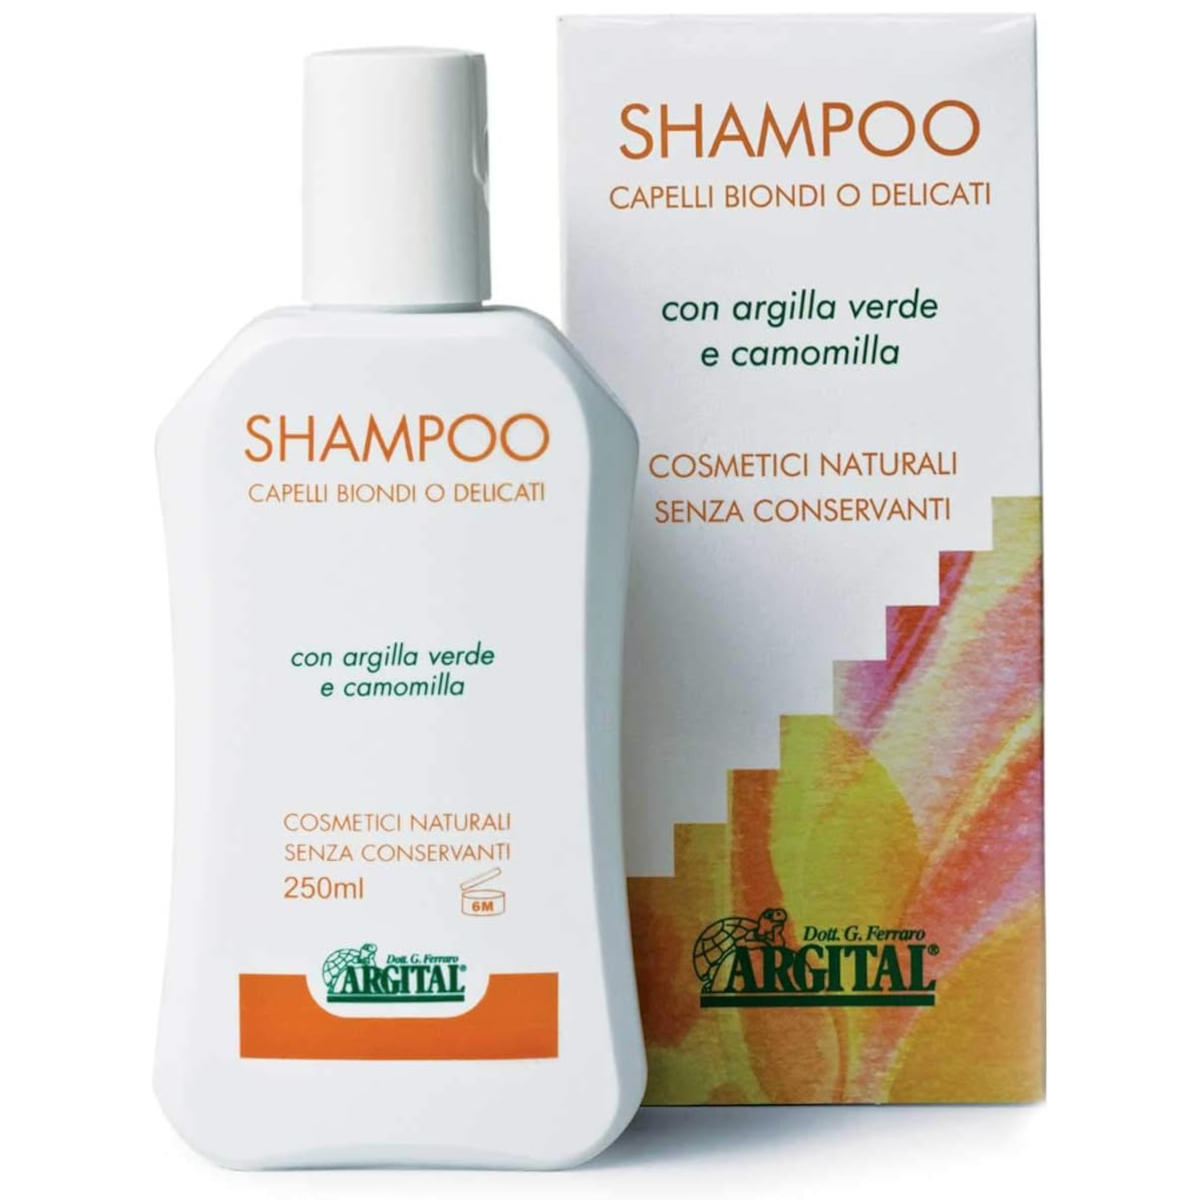 Shampoo capelli biondi per bambini Argital